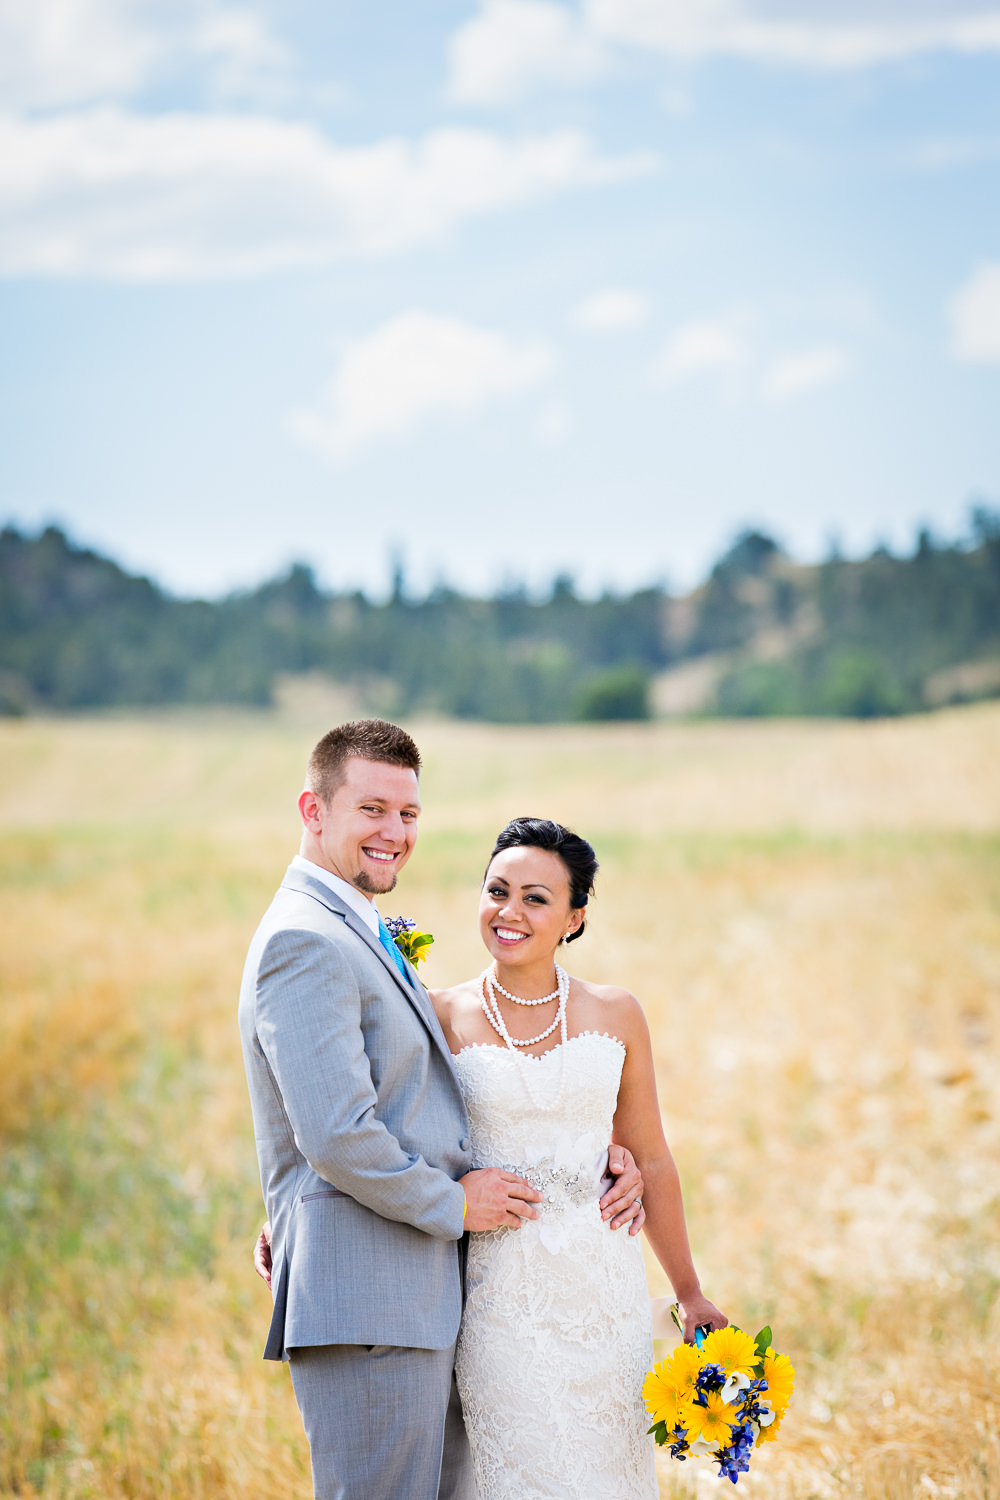 billings-montana-chanceys-wedding-first-look-bride-groom-traditional-pose.jpg